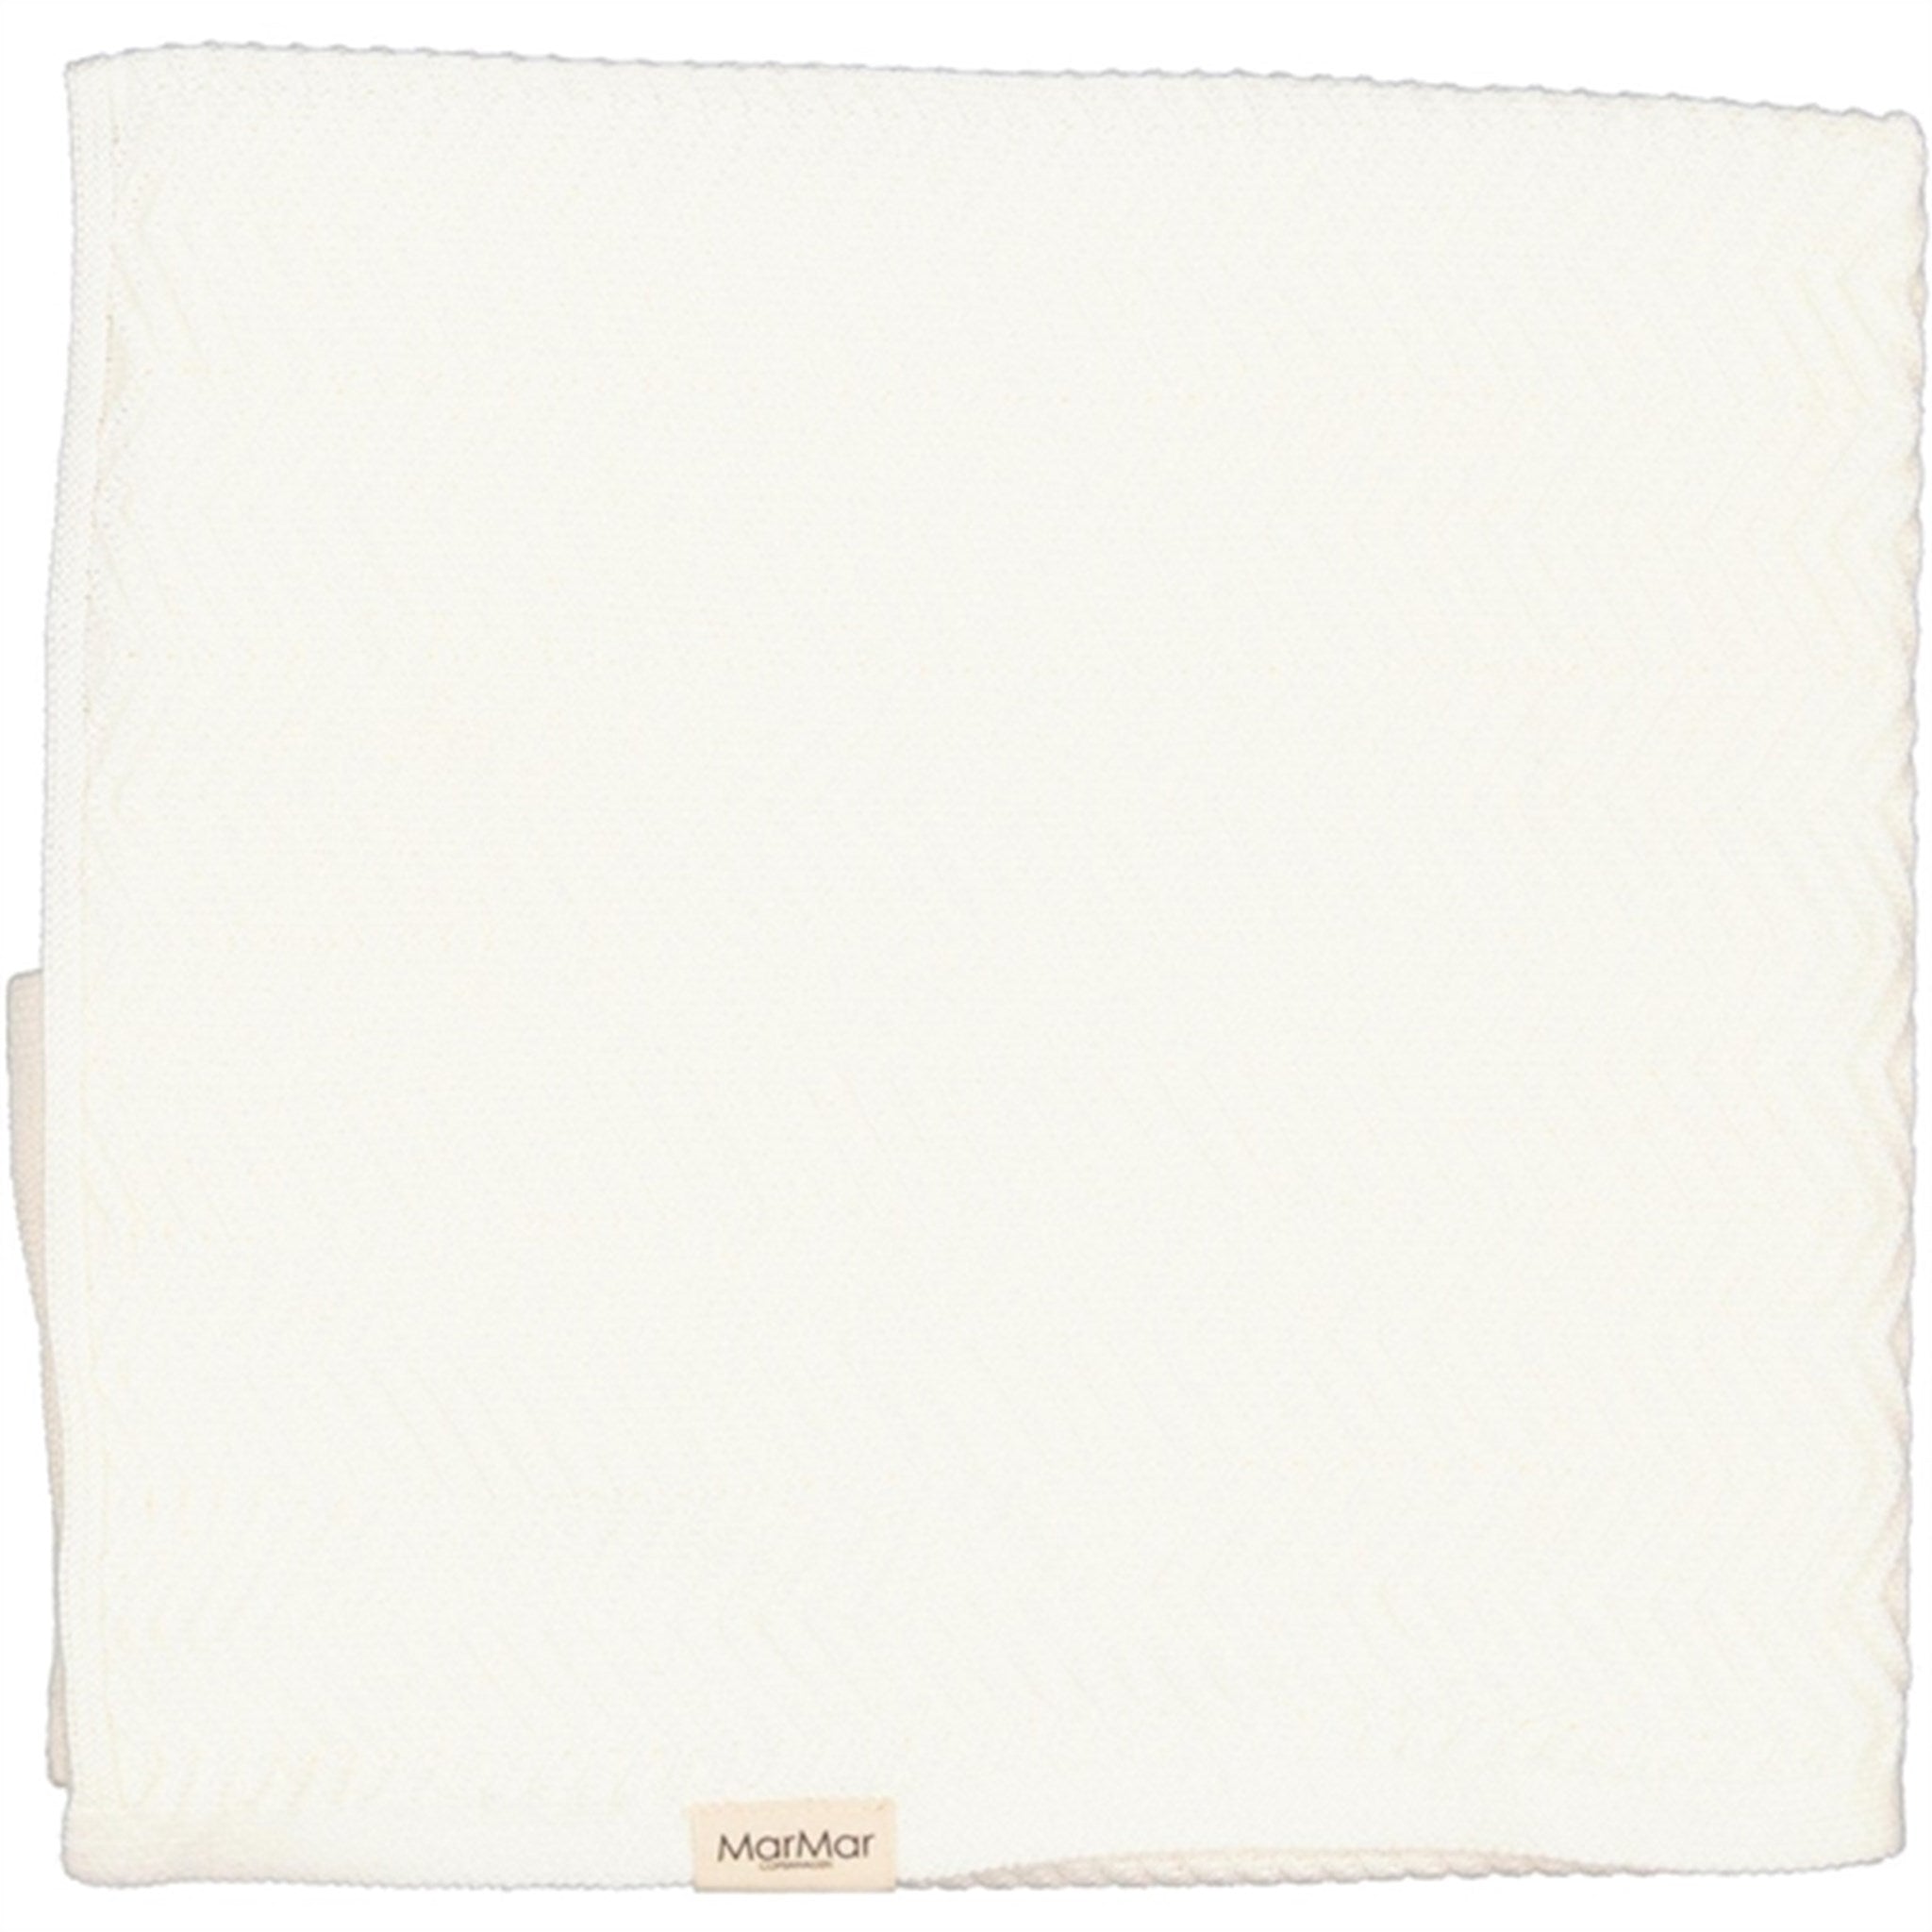 MarMar New Born Gentle White Alia Blanket